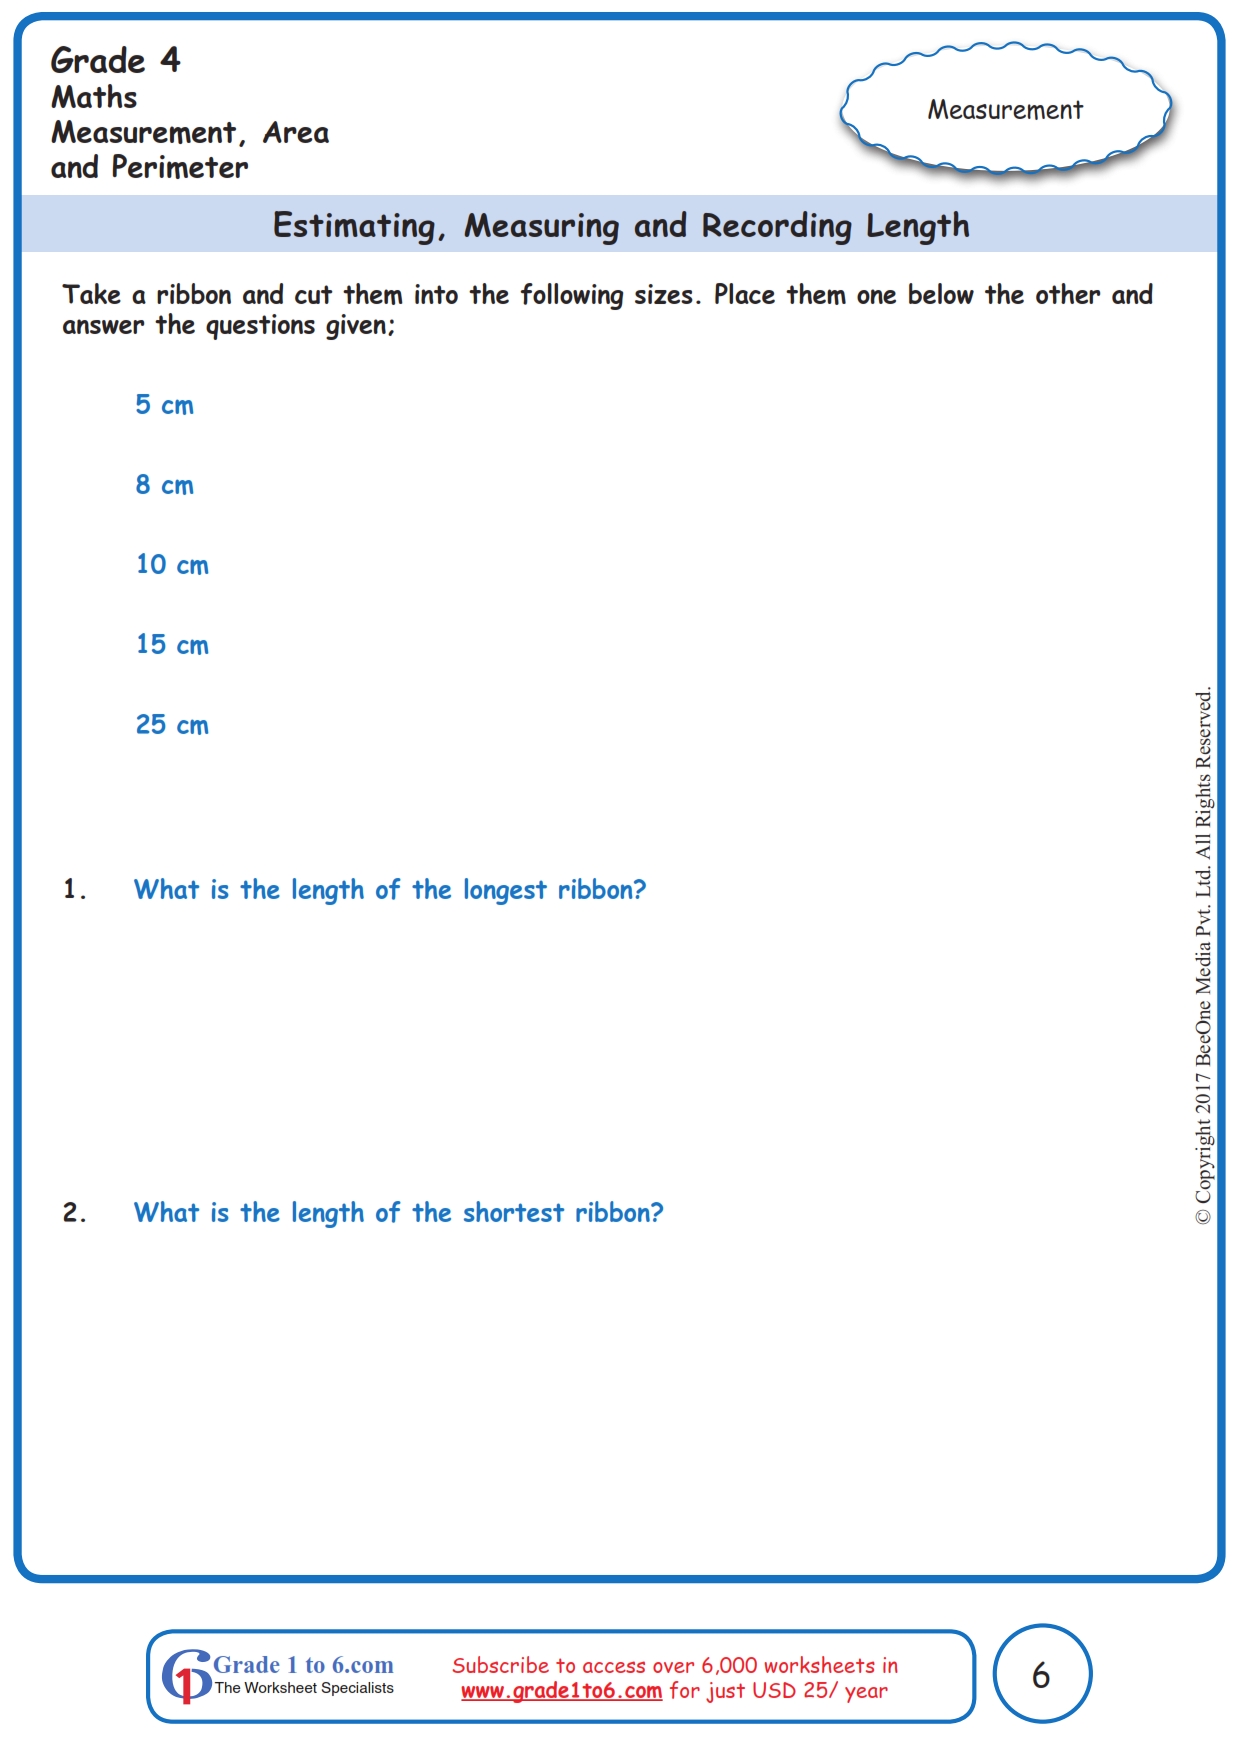 grade 4 measurement worksheets www grade1to6 com